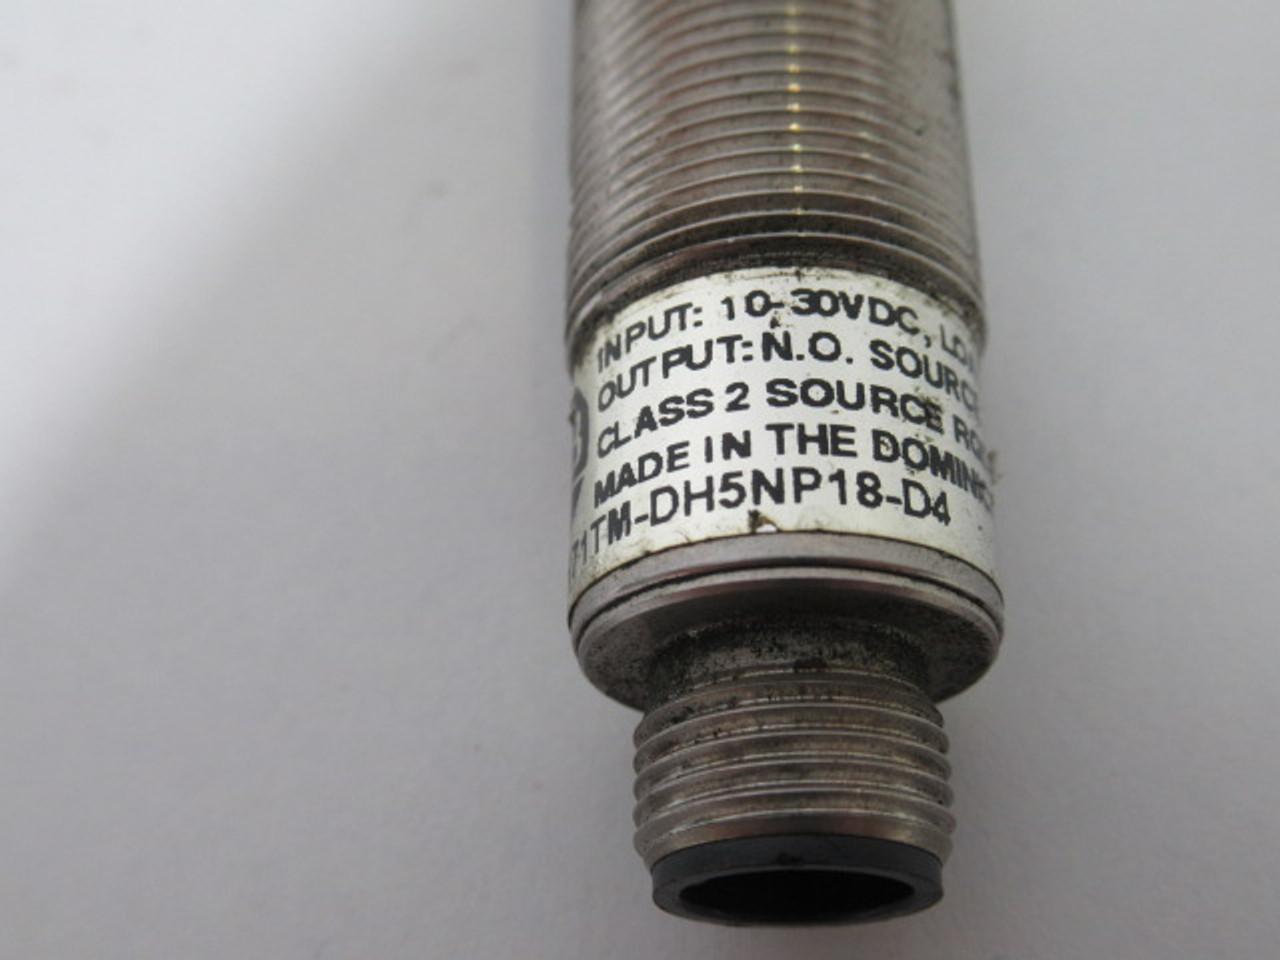 Allen-Bradley 871TM-DH5NP18-D4 Proximity Sensor 10-30VDC *No Washer* USED